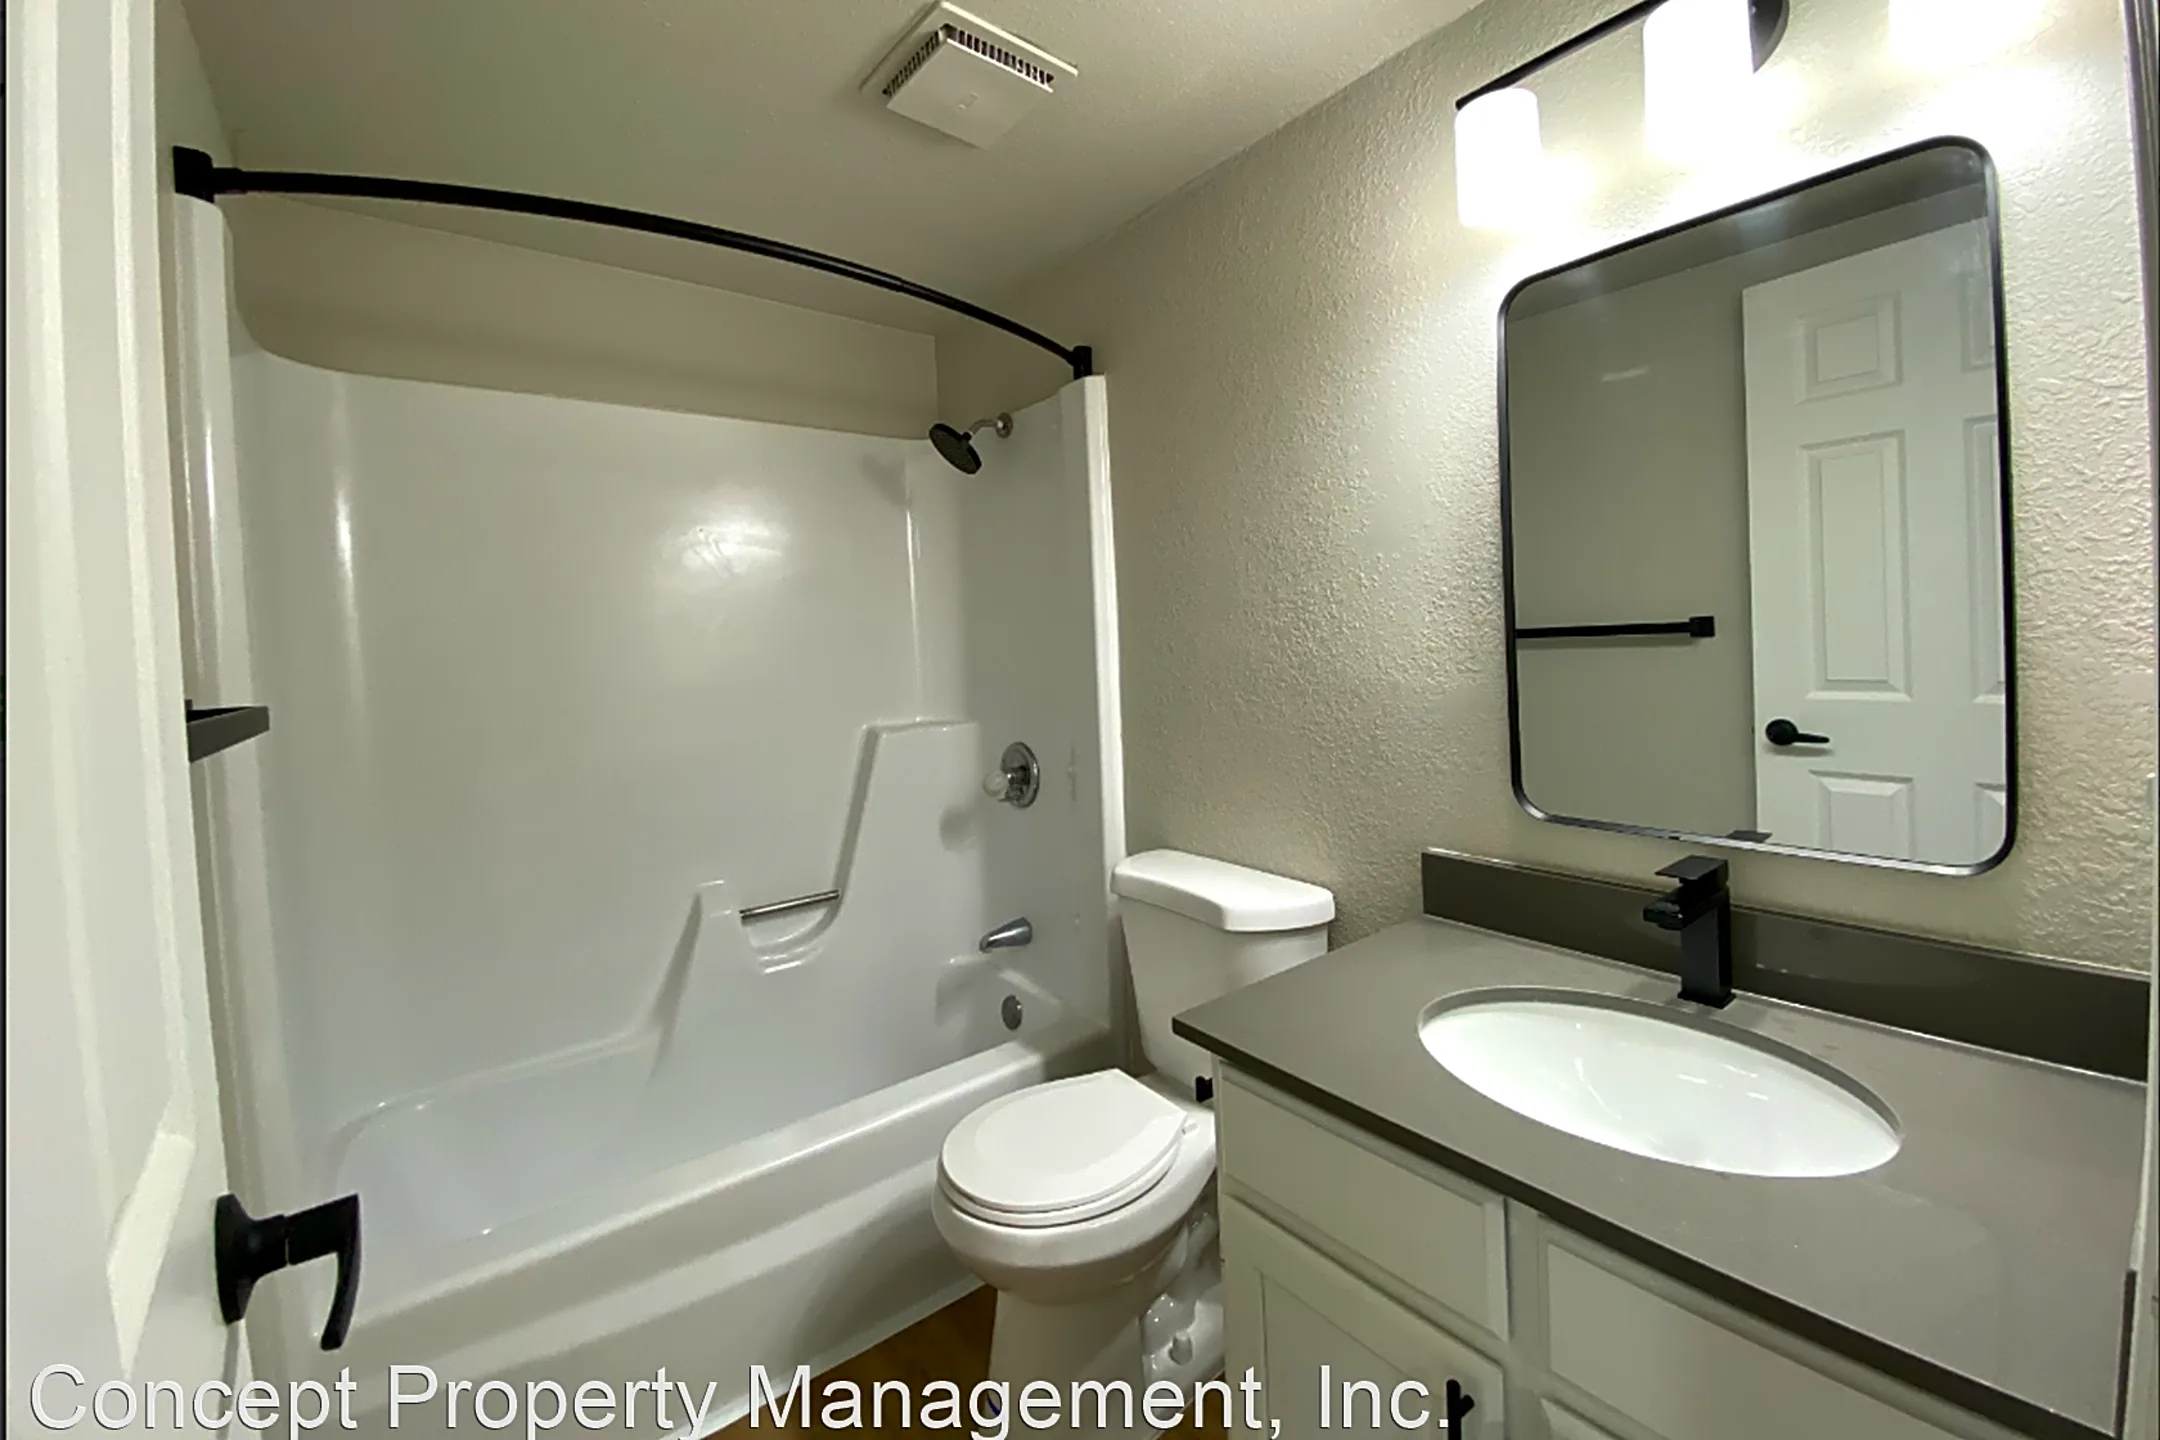 Bathroom - 350 S Elizabeth St. - Salt Lake City, UT